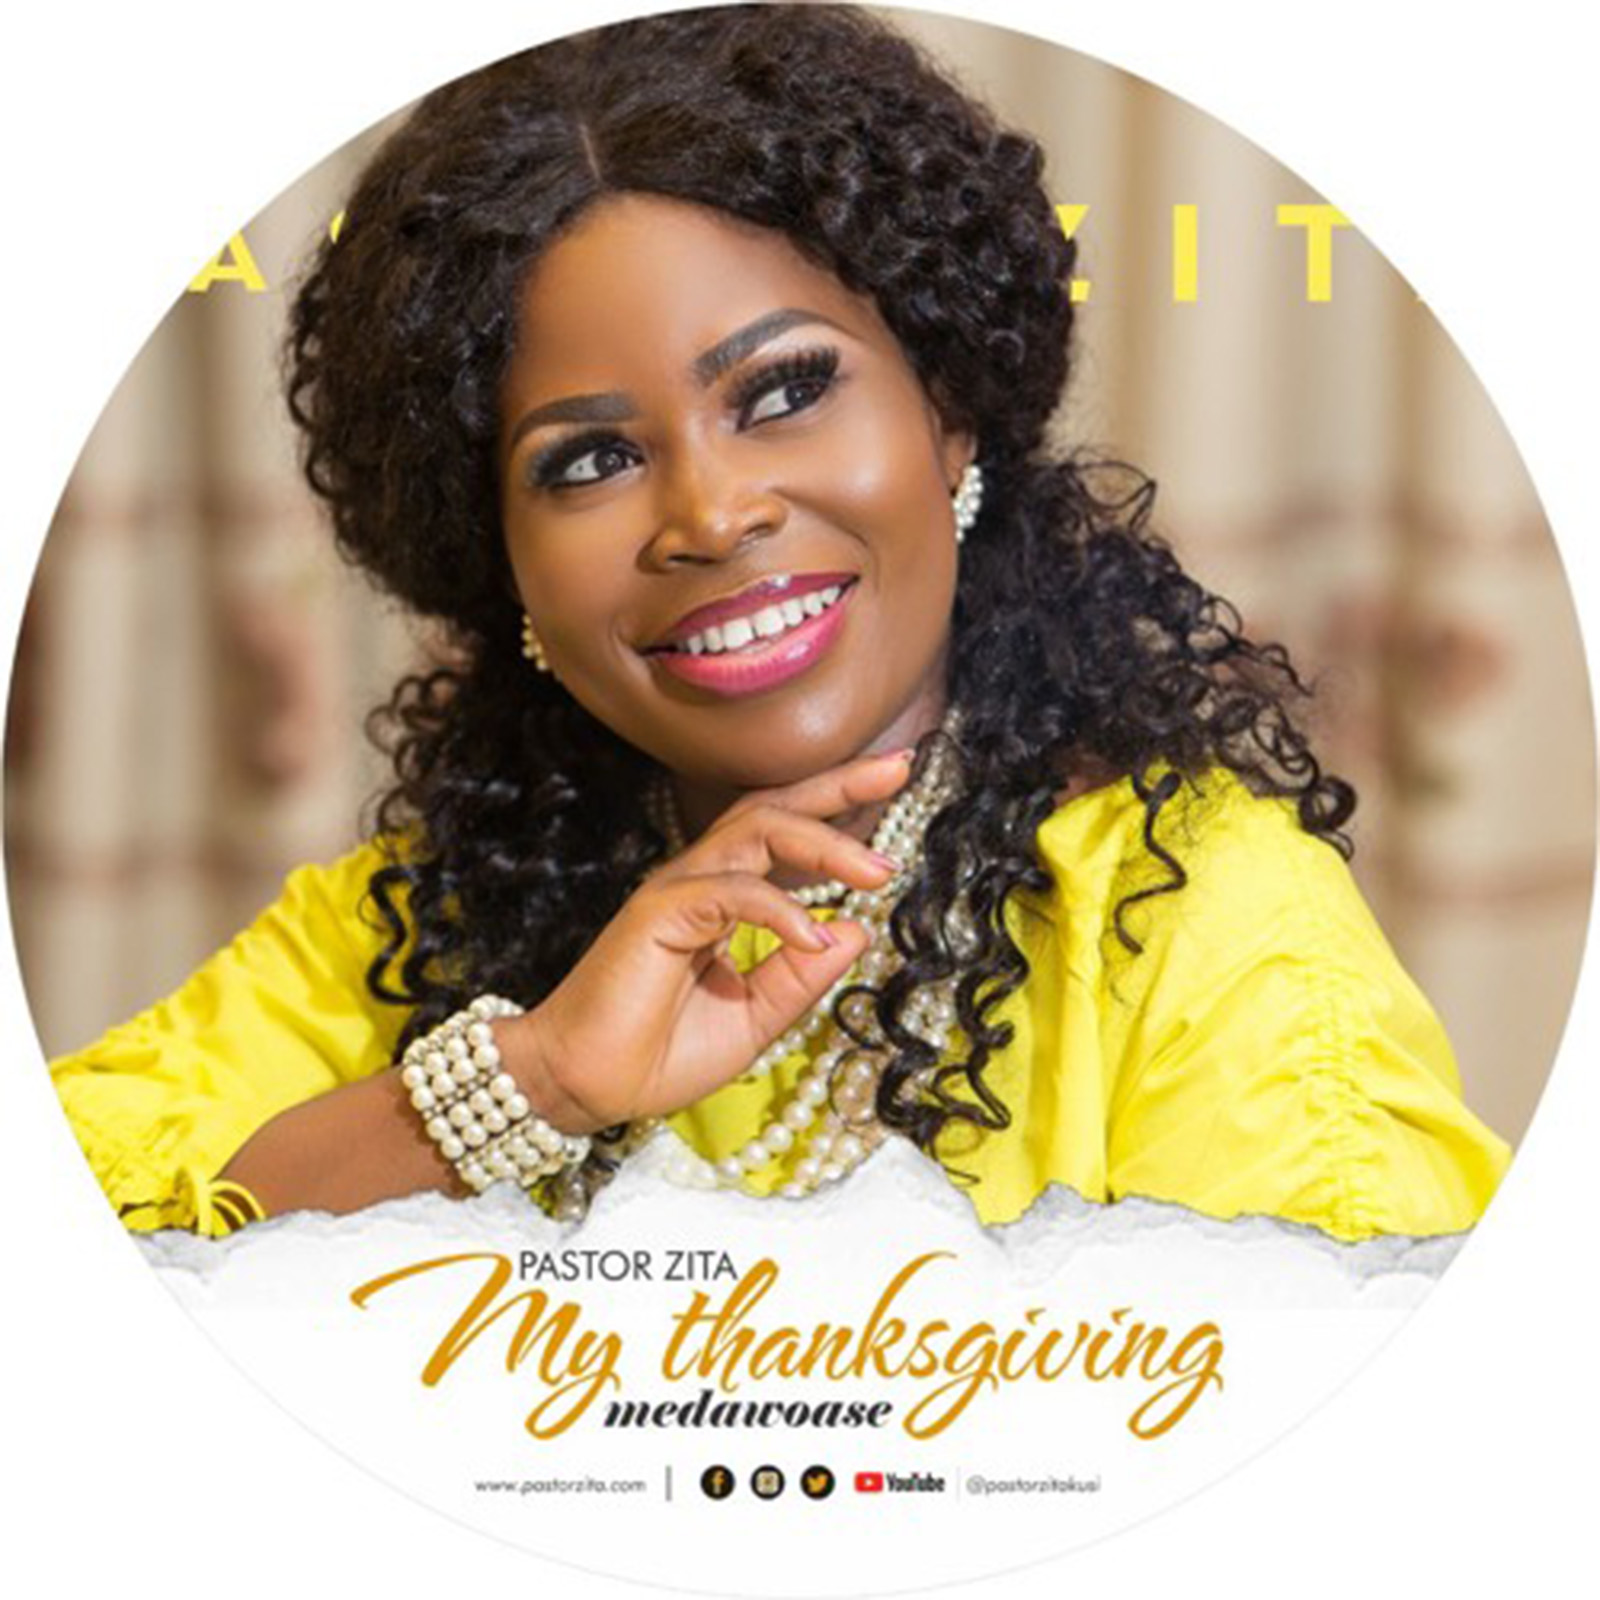 My Thanksgiving (Medawoase) by Pastor Zita